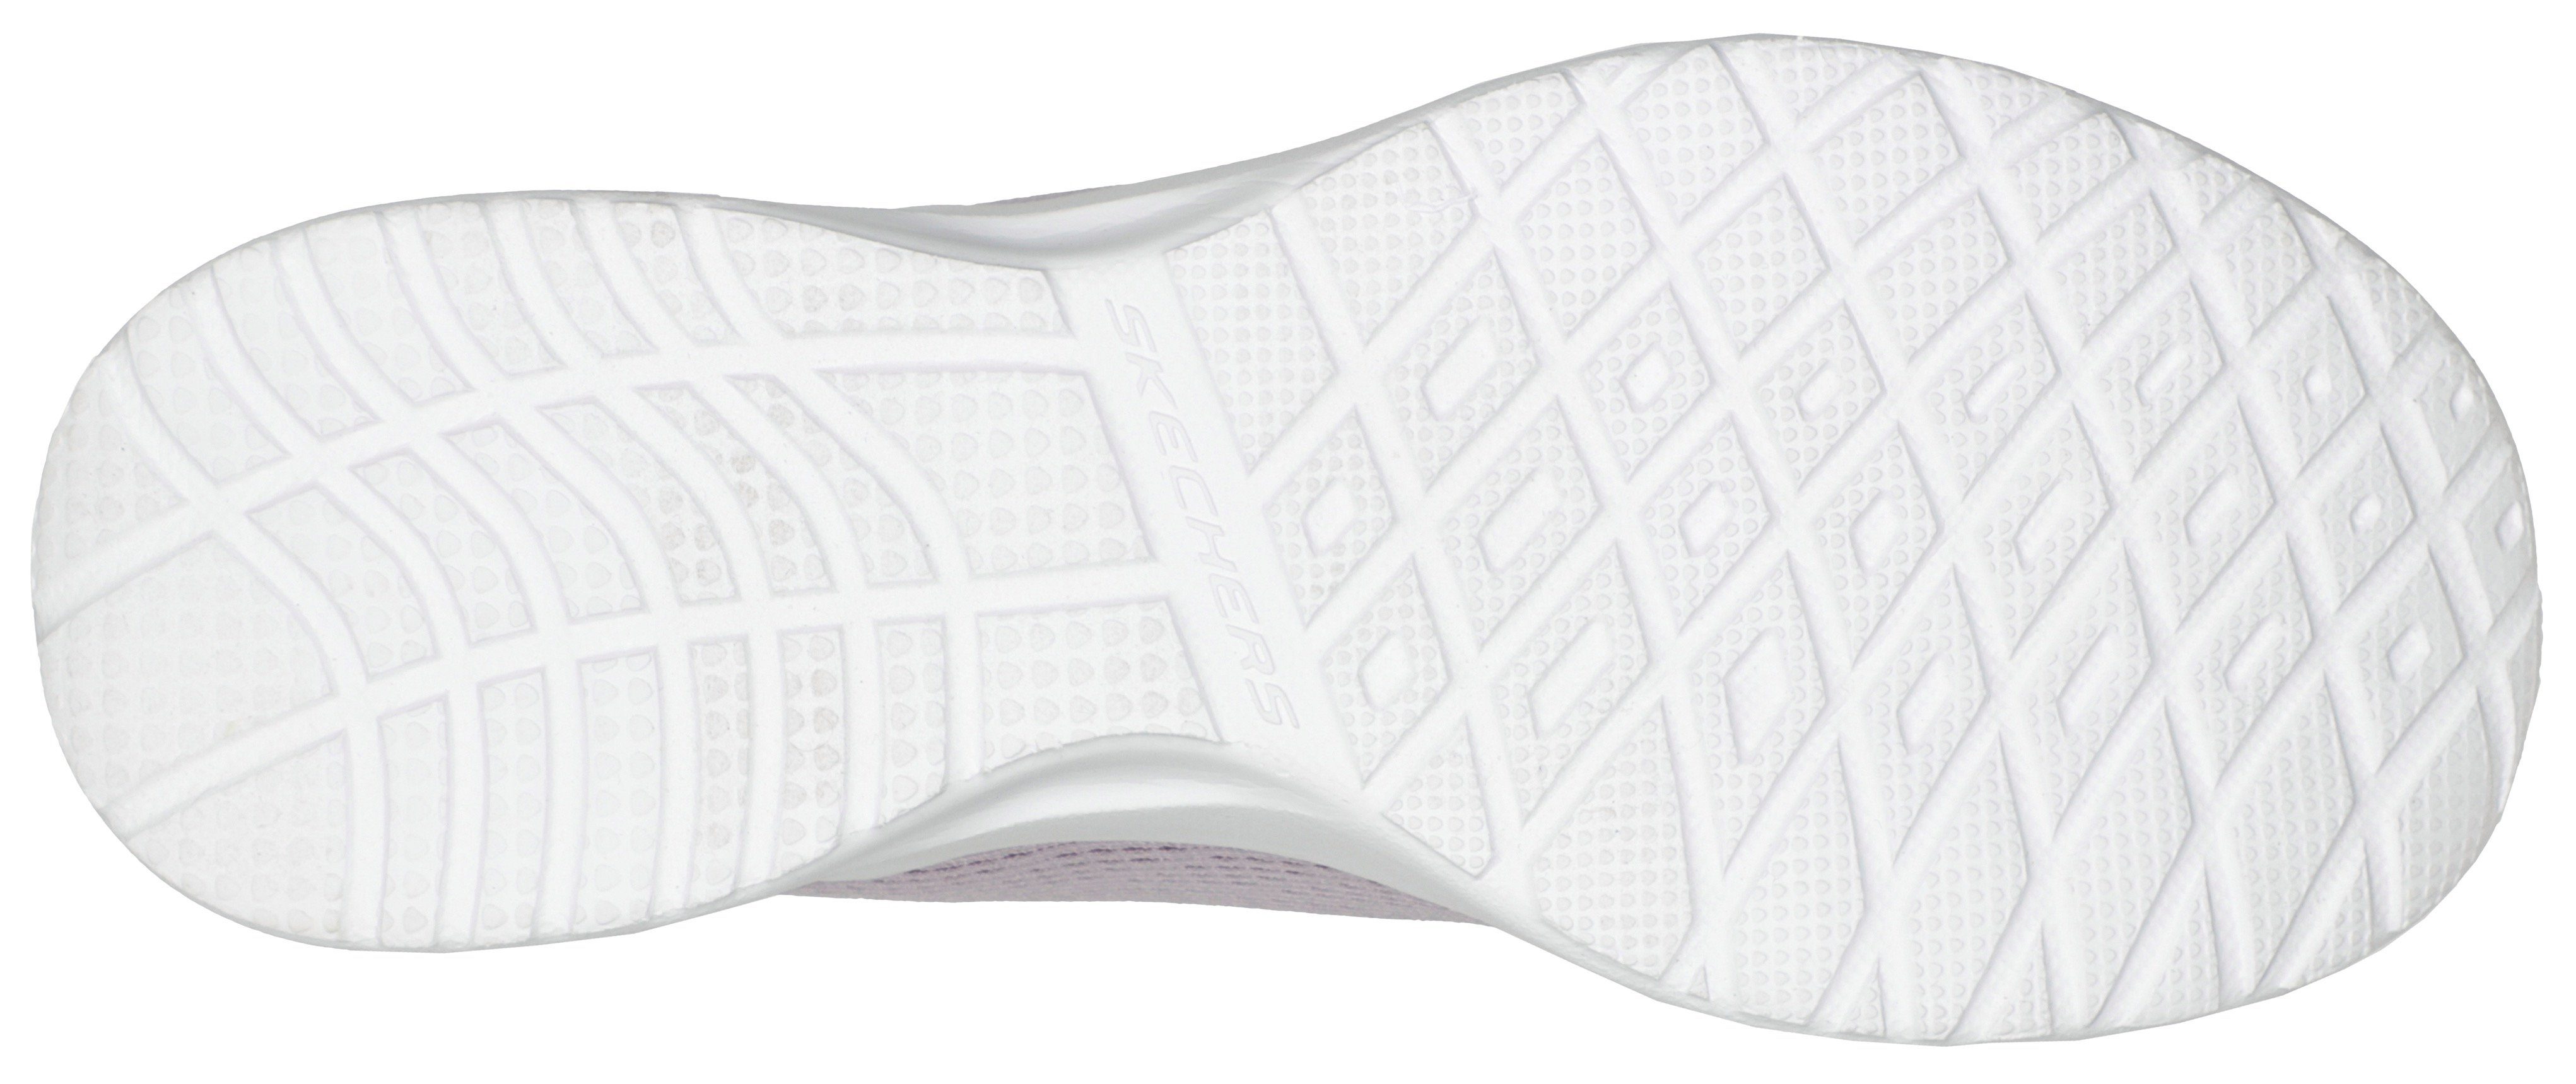 buntem Skechers Print mit LAID lavendel-kombiniert SKECH-AIR der DYNAMIGHT Ferse OUT an Sneaker